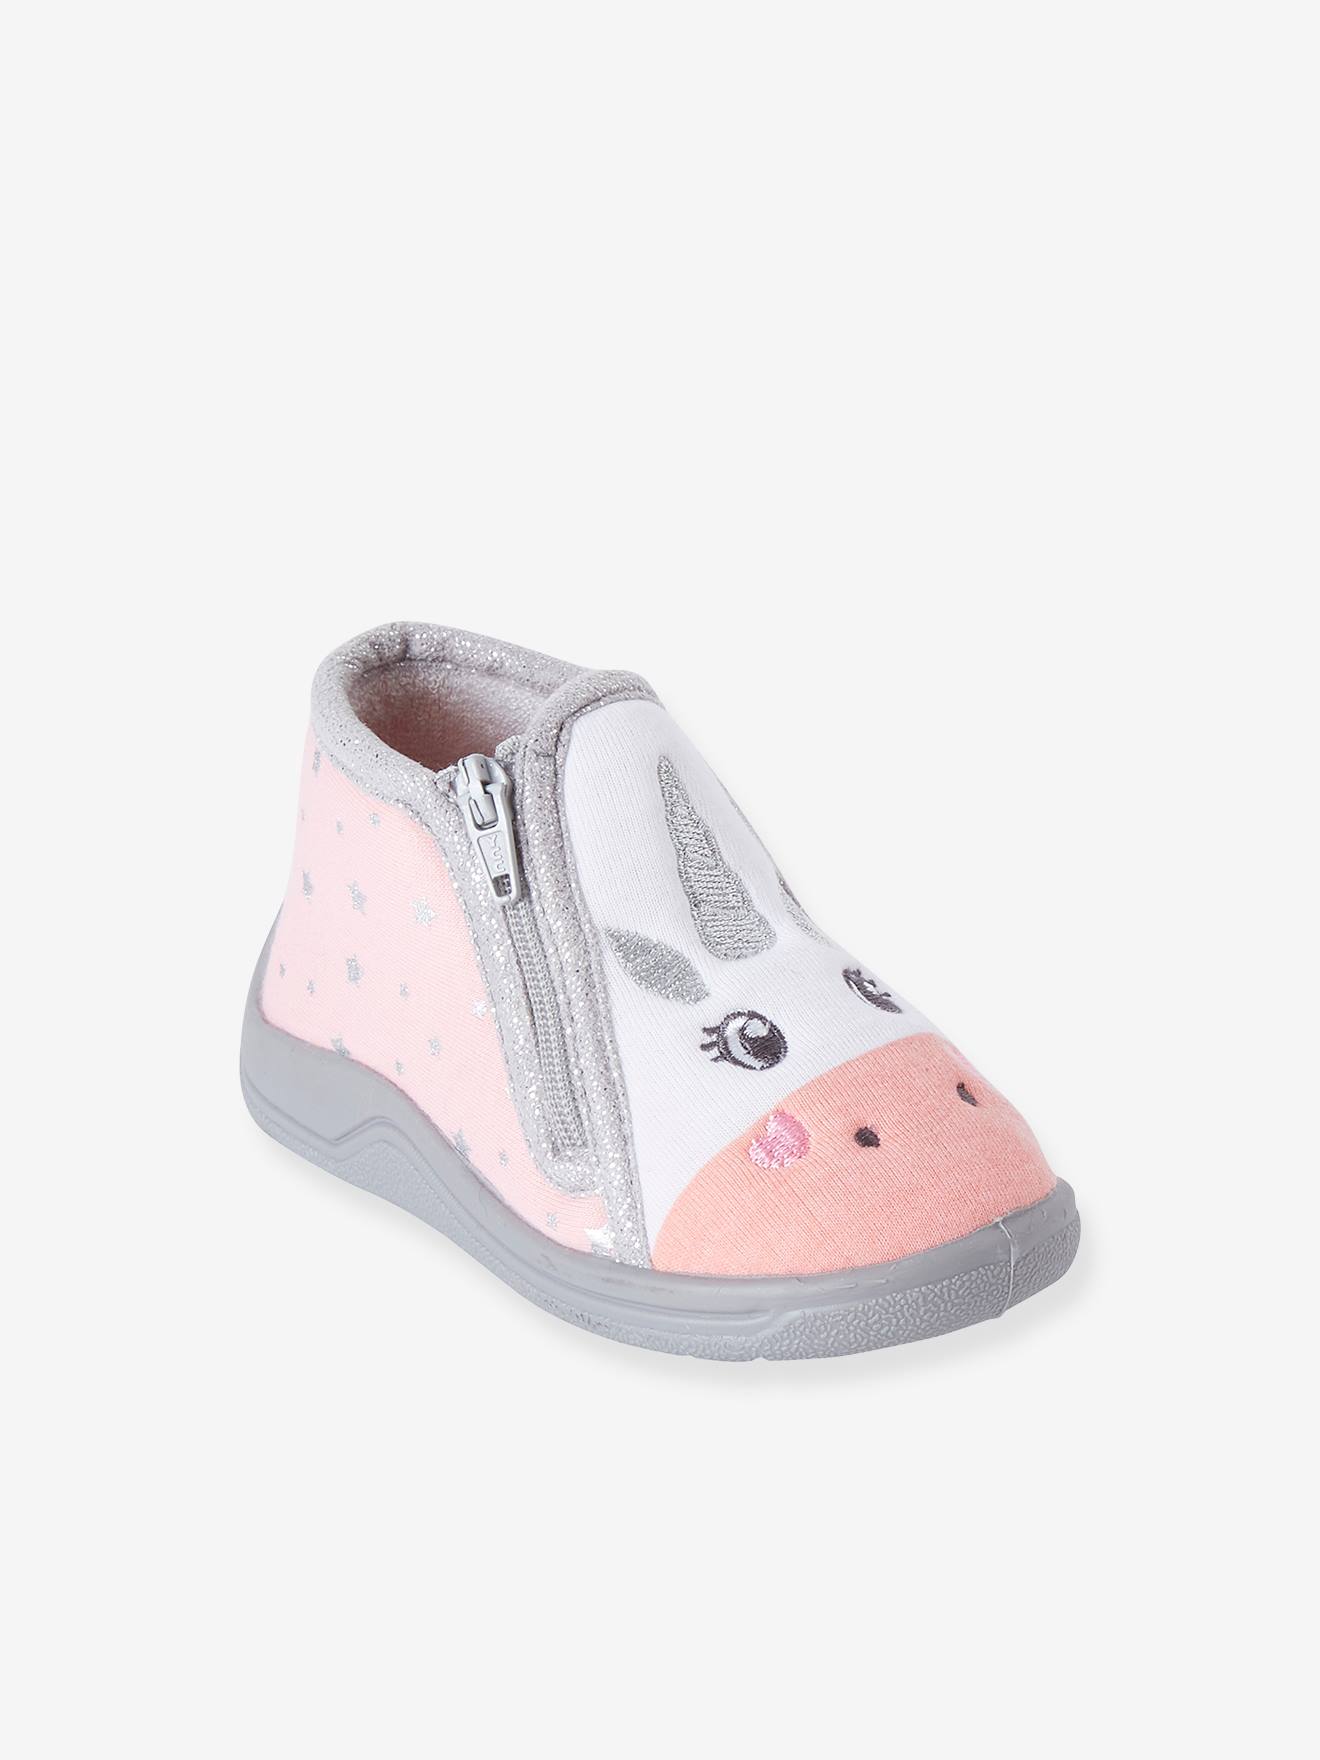 bebe pink shoes